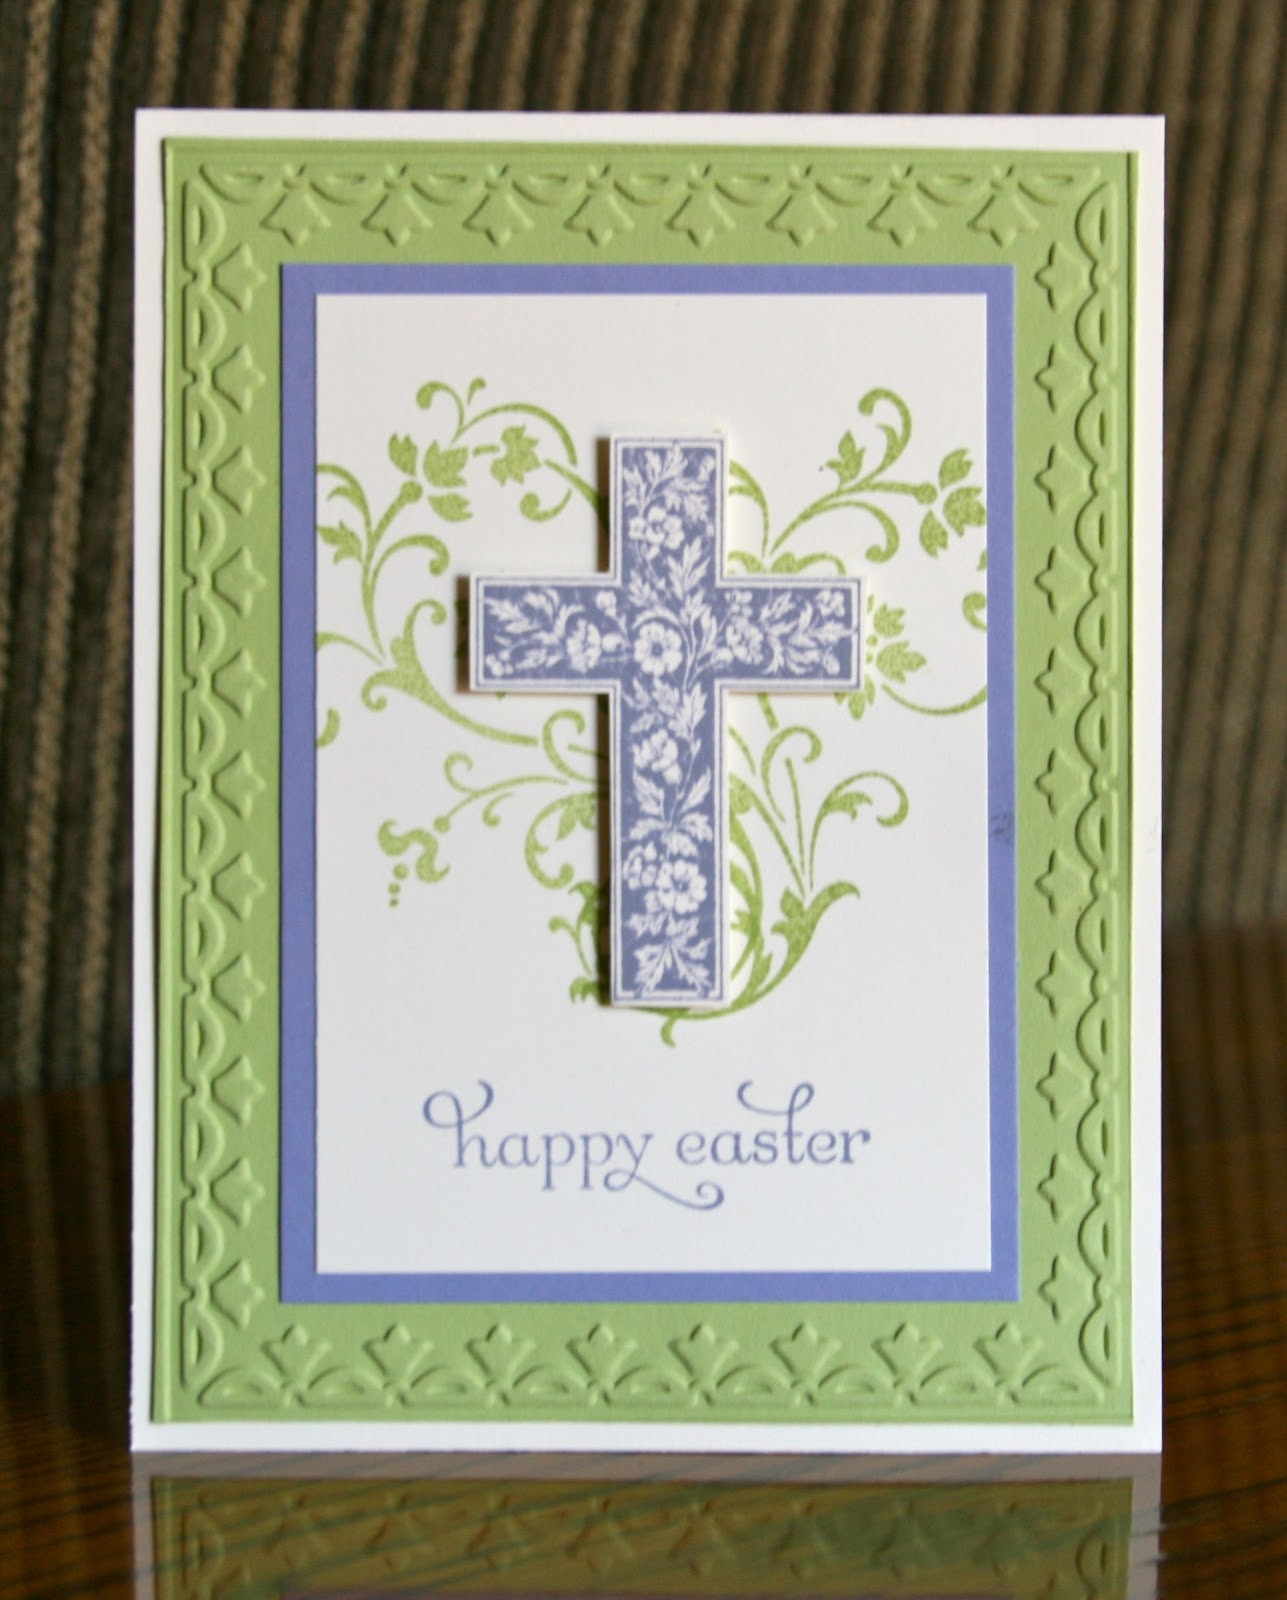 Stampin Up Easter Cards Ideas
 Krystal s Cards Delightful Cards